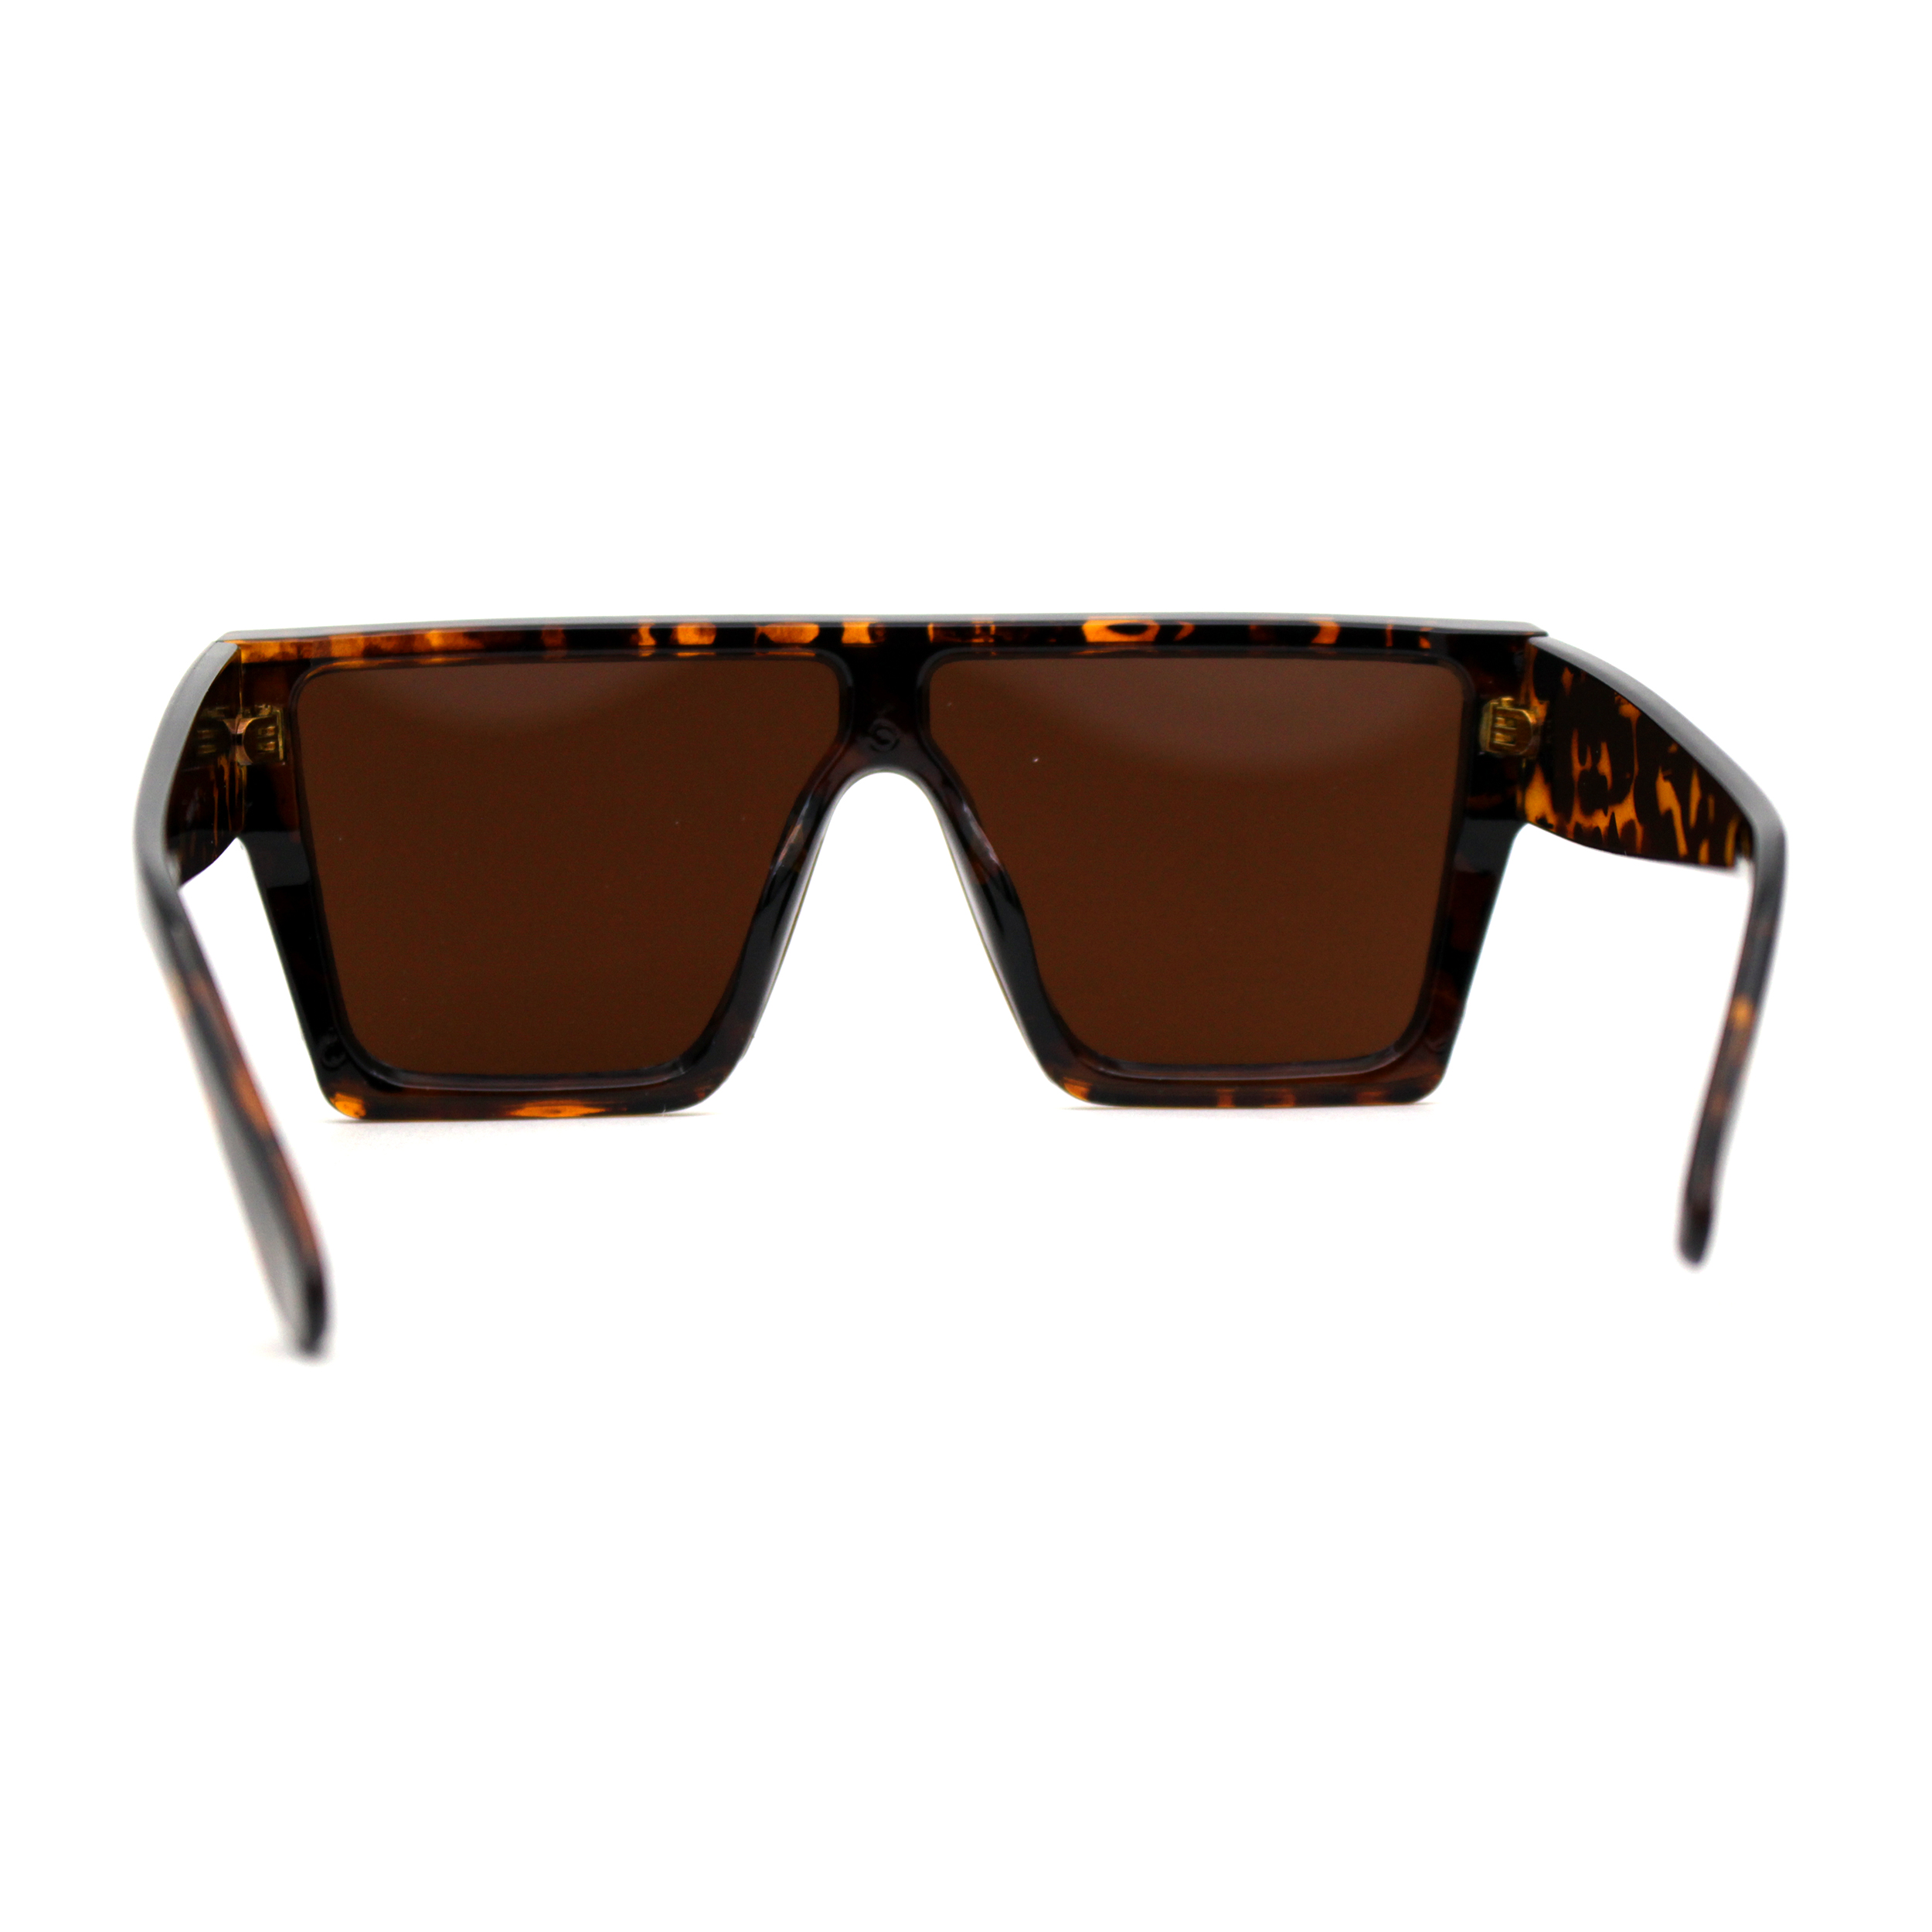 Womens Star Stud Trim Flat Top Shield Mob Plastic Sunglasses Tortoise Brown - image 4 of 4